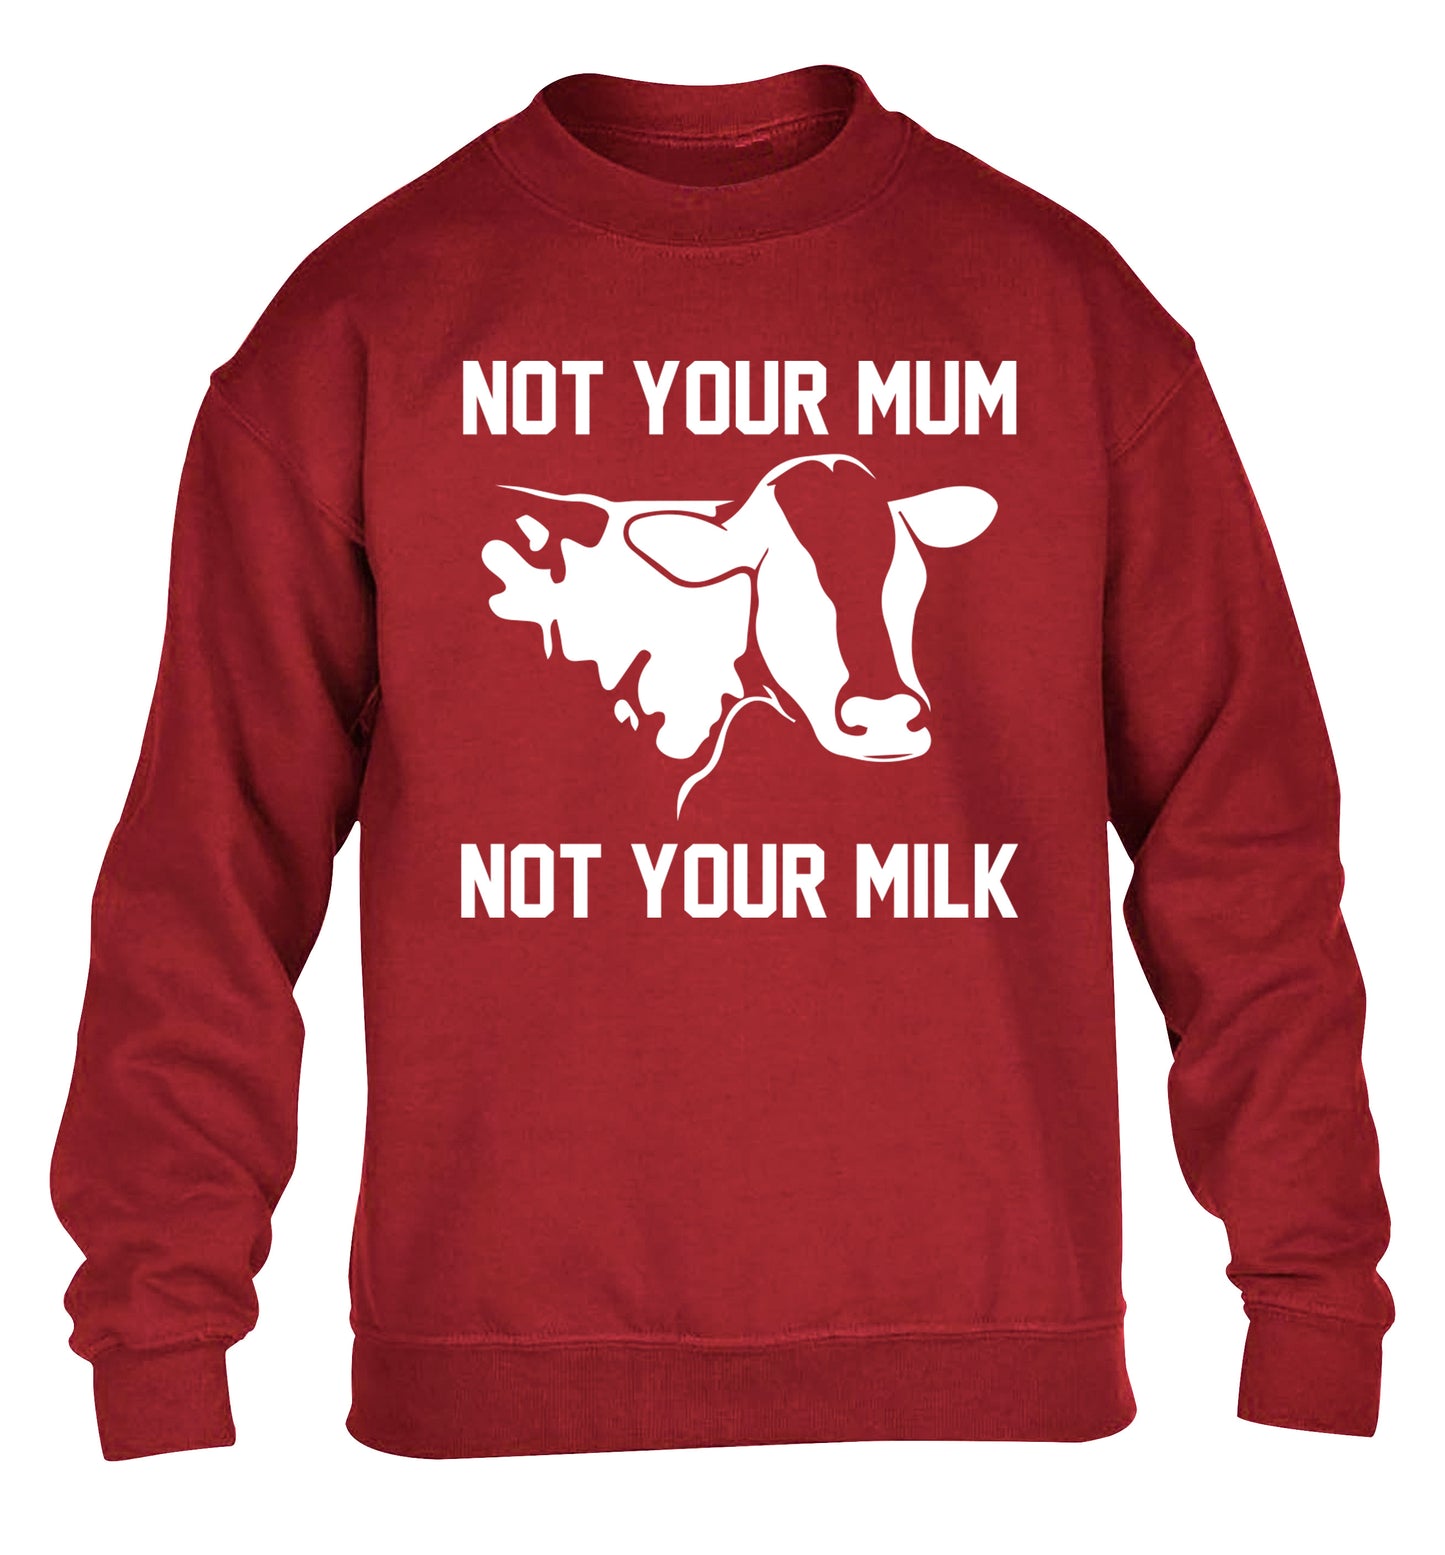 Not your mum not your milk children's grey sweater 12-14 Years